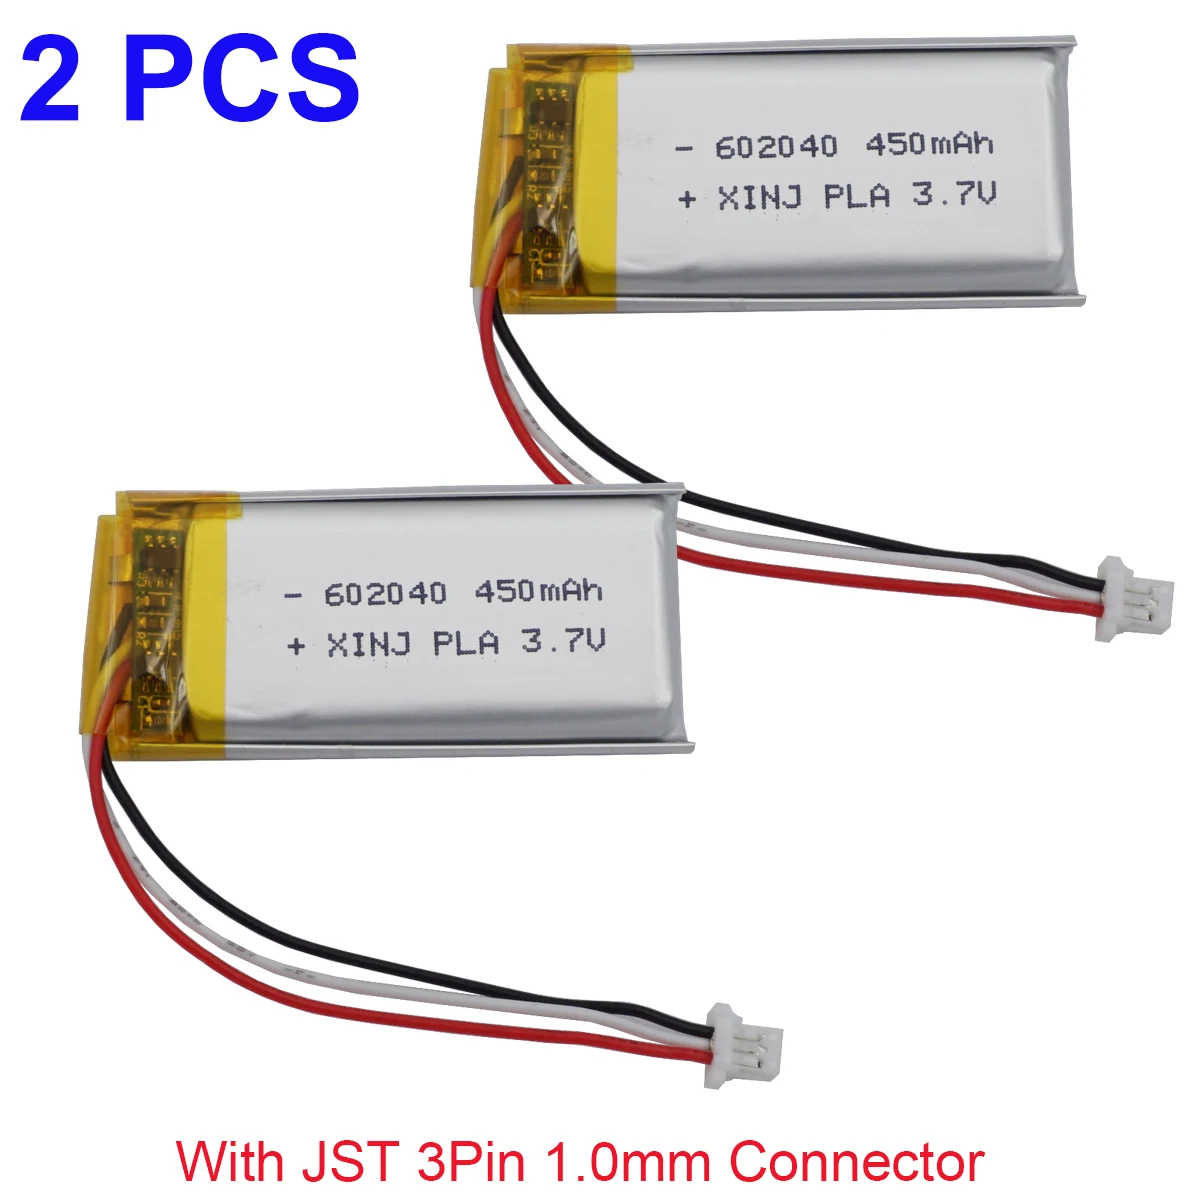 

2pcs 3.7V 450mAh 1.66Wh 602040 Thermistor NTC 3 Wires JST 3Pin 1.0mm Plug Li-Polymer Rechargeable Li Battery For GPS Car Camera